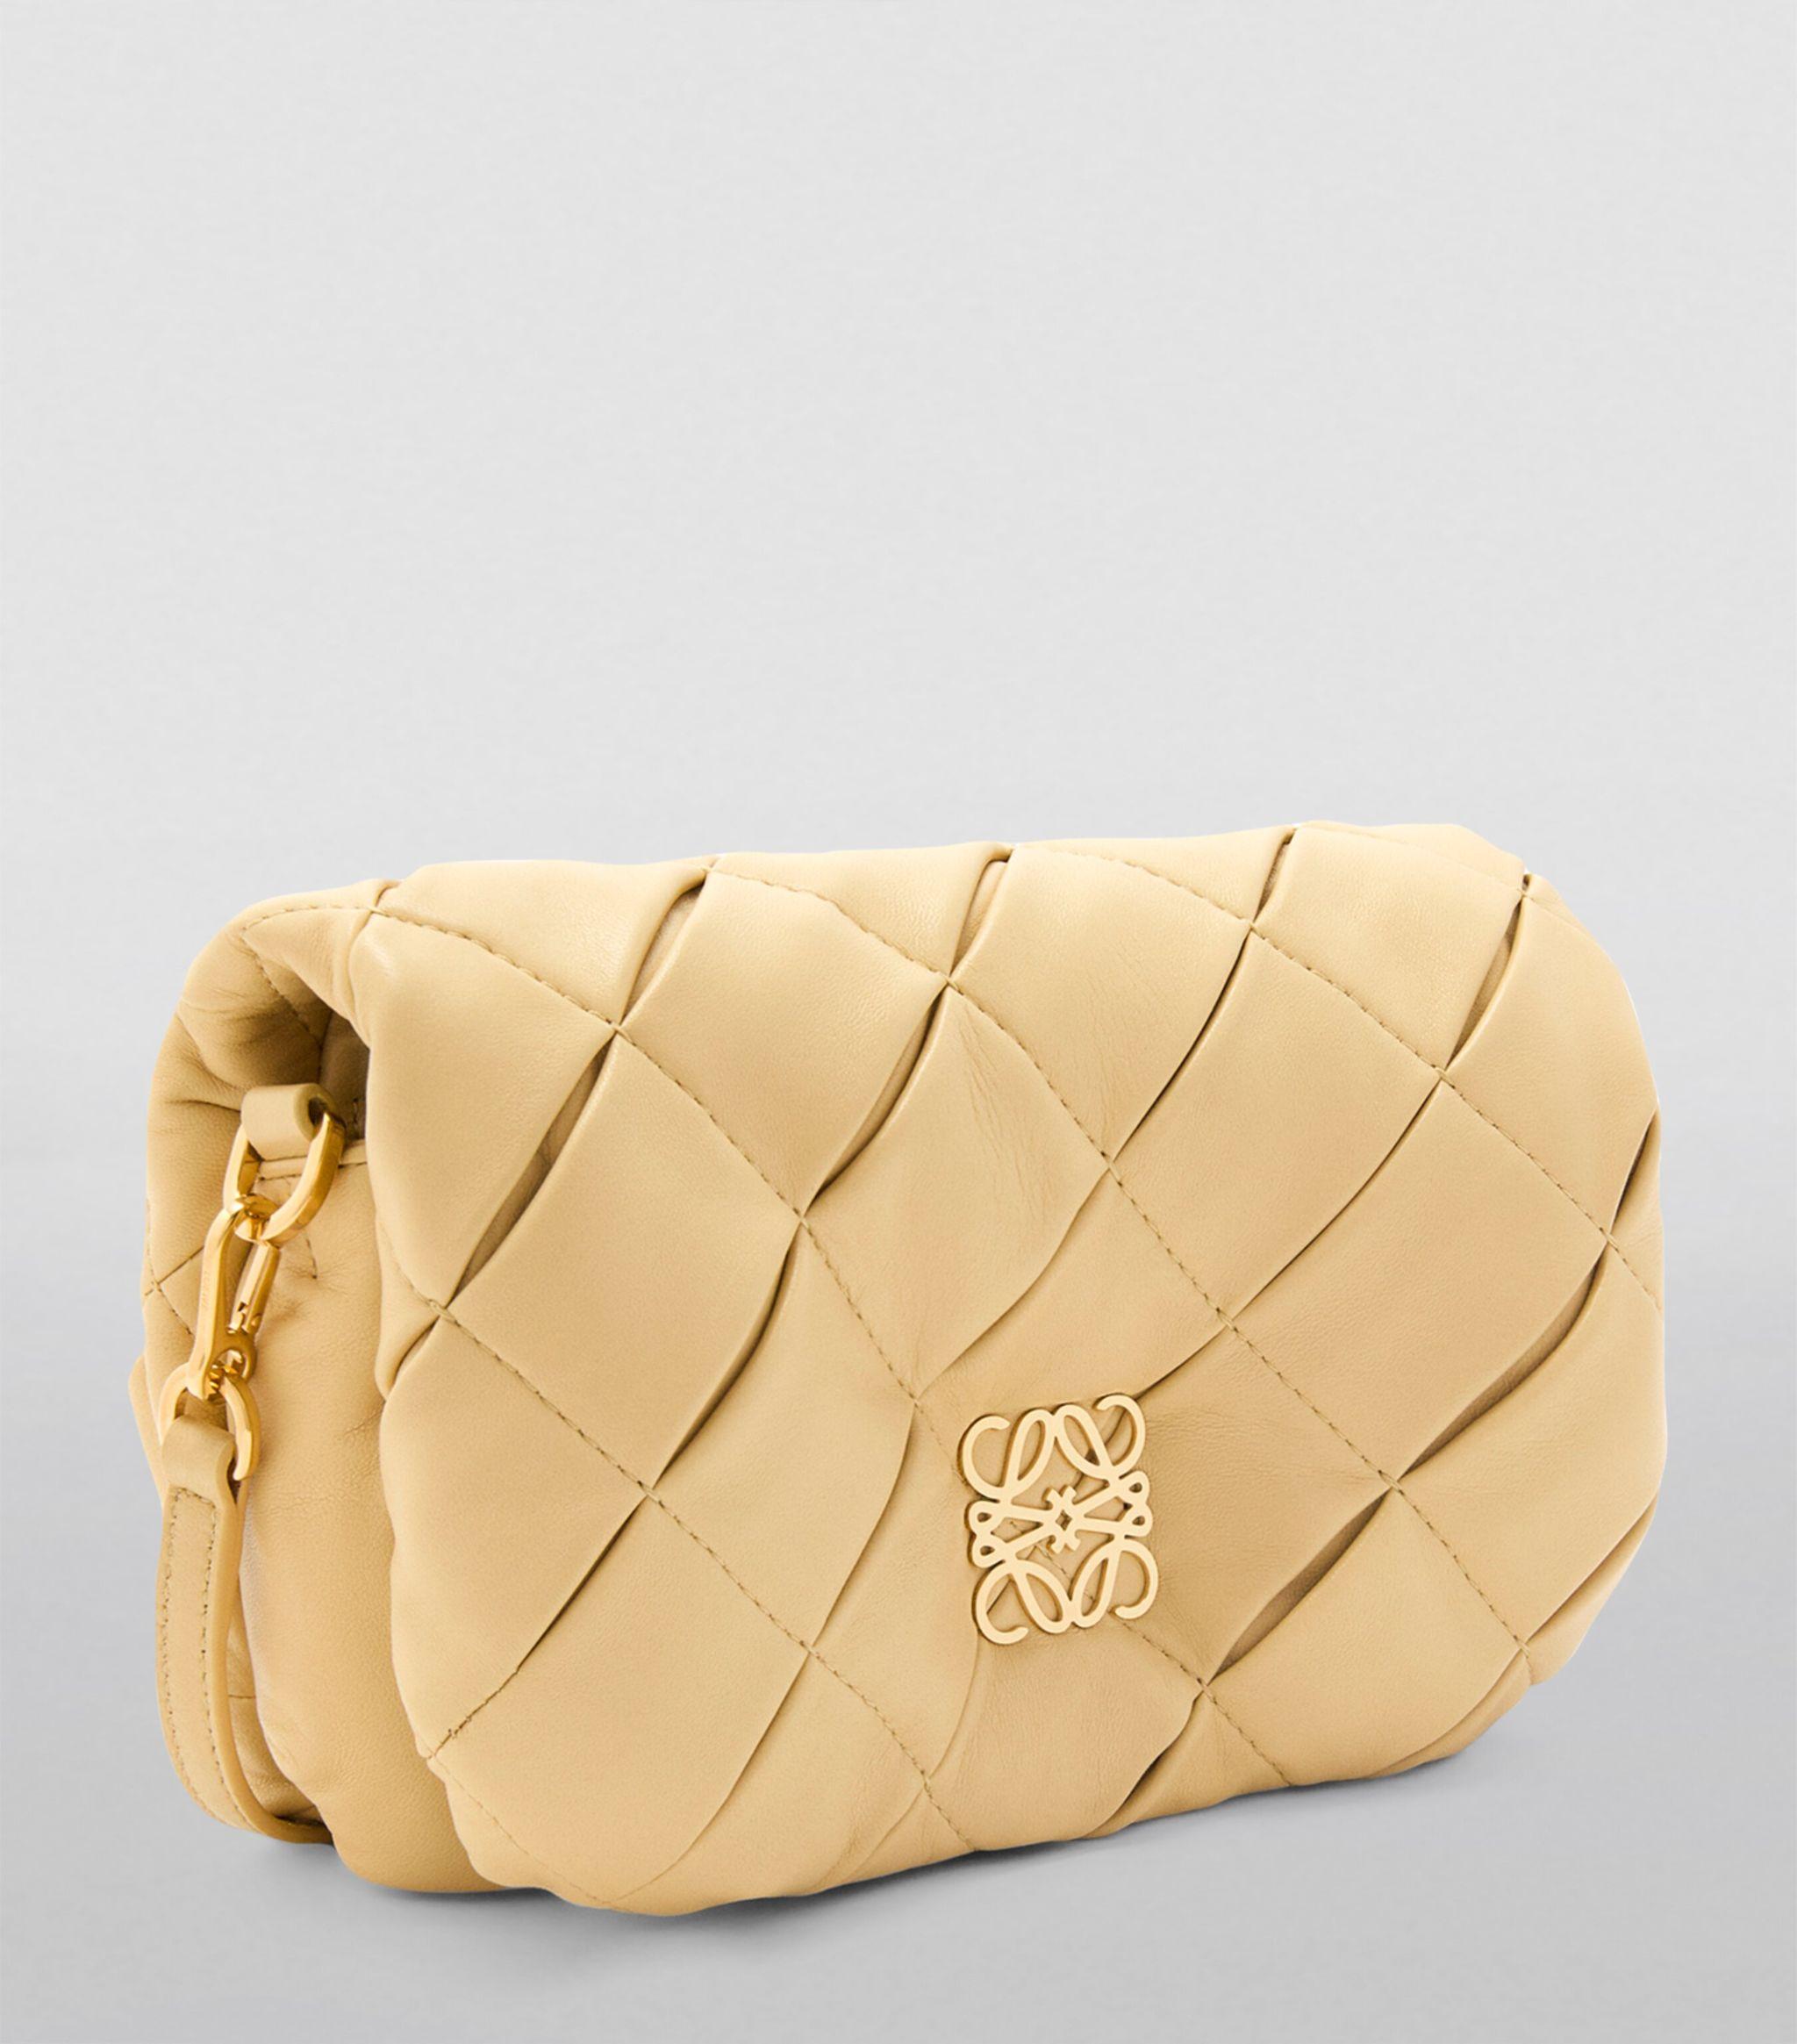 NWT LOEWE Brown Leather Puffer Goya Gold Chain Shoulder Bag Size